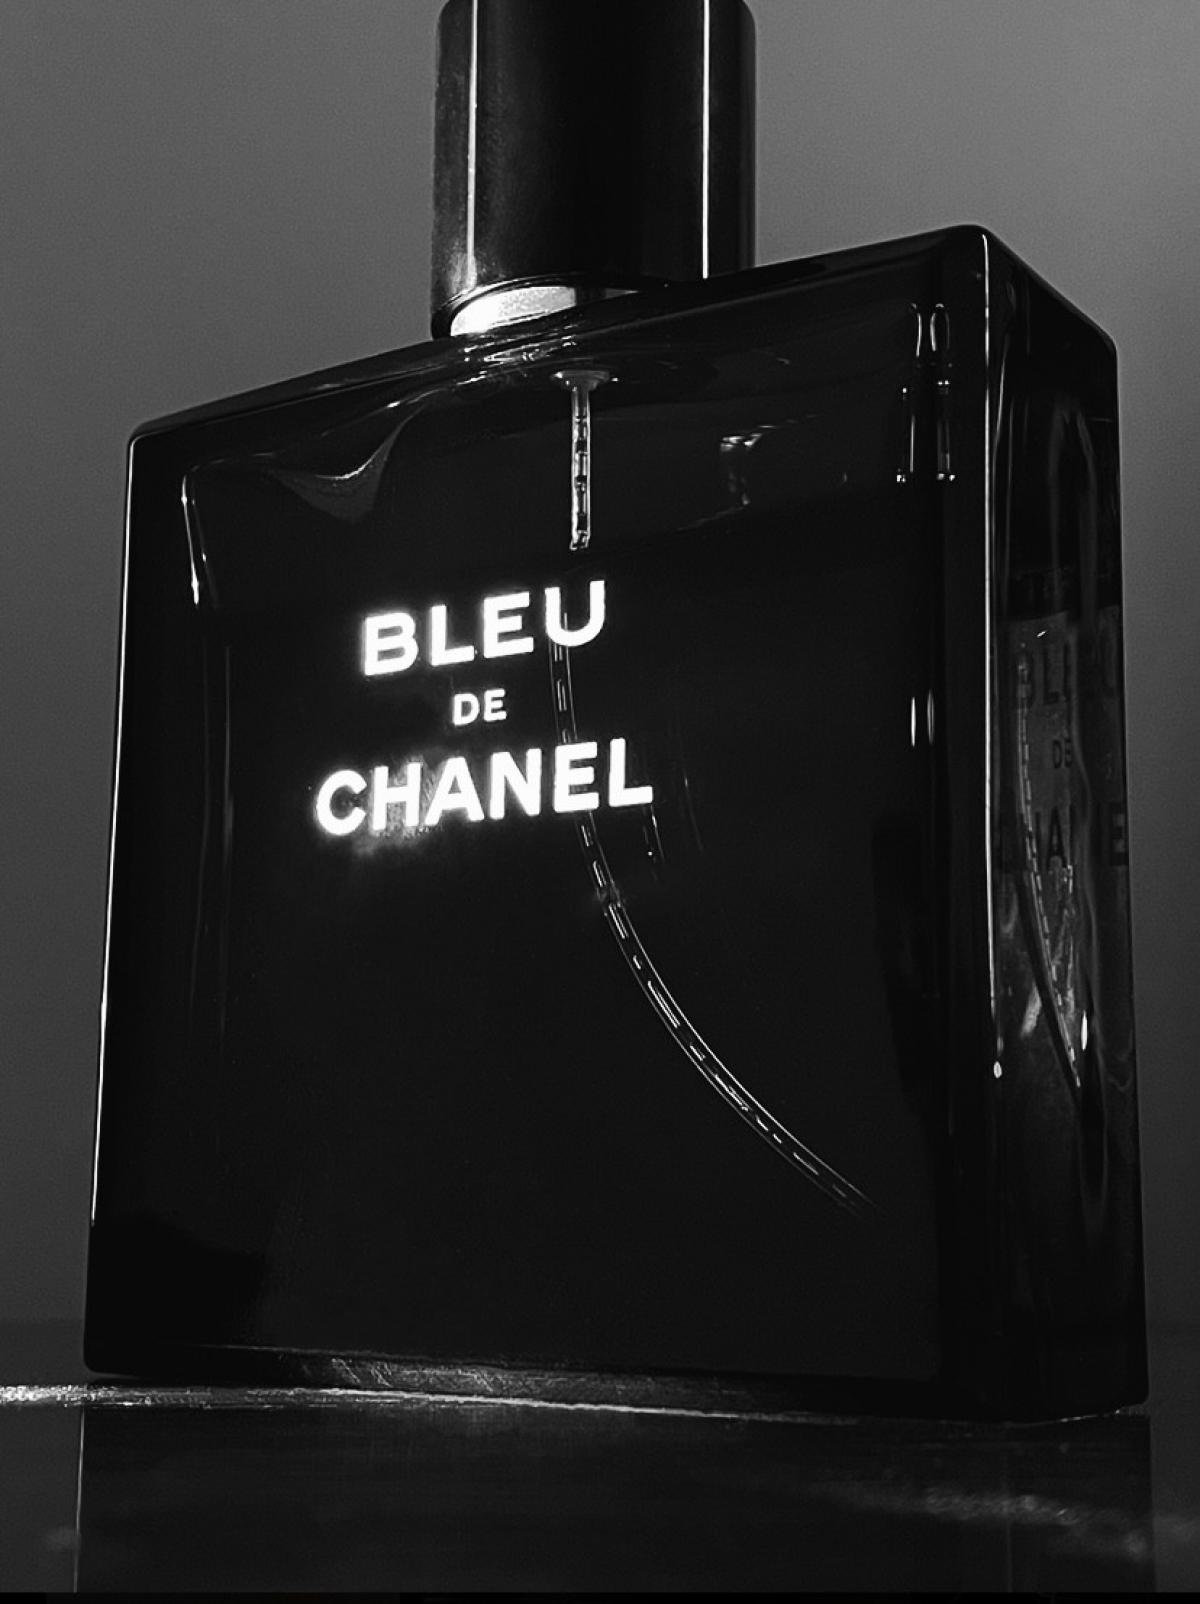 Bleu de chanel москва. Chanel bleu de Chanel. Chanel Blue de Chanel men. Одеколон Chanel мужской bleu. Bleu de Chanel реклама.